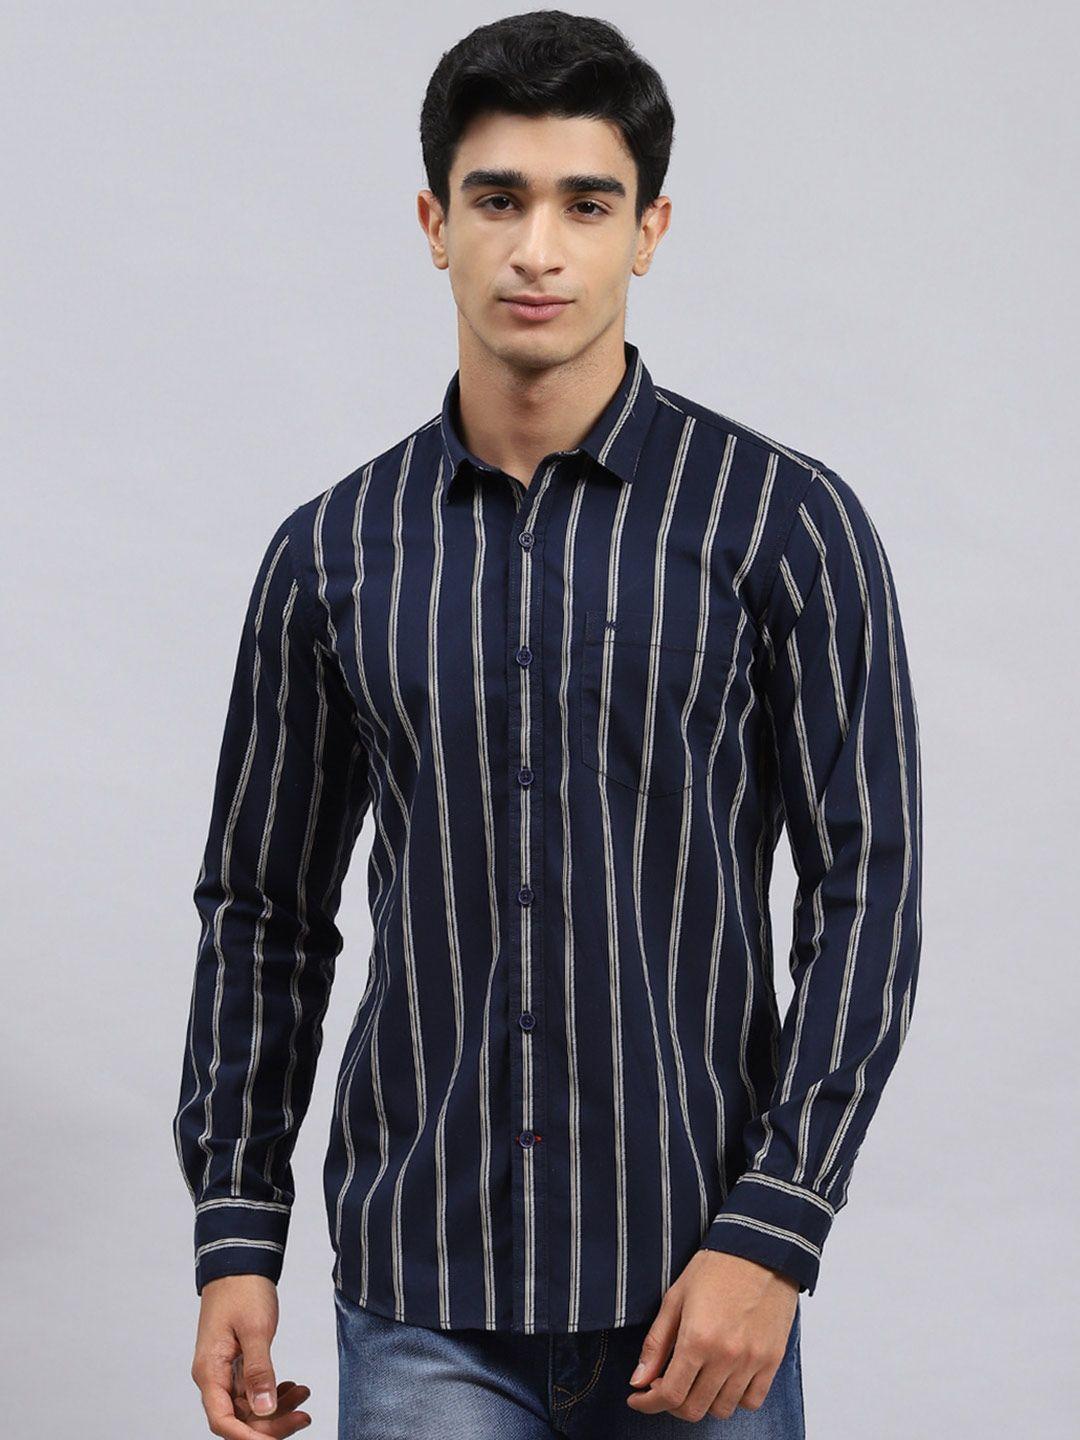 monte-carlo-classic-slim-fit-vertical-stripes-pure-cotton-casual-shirt